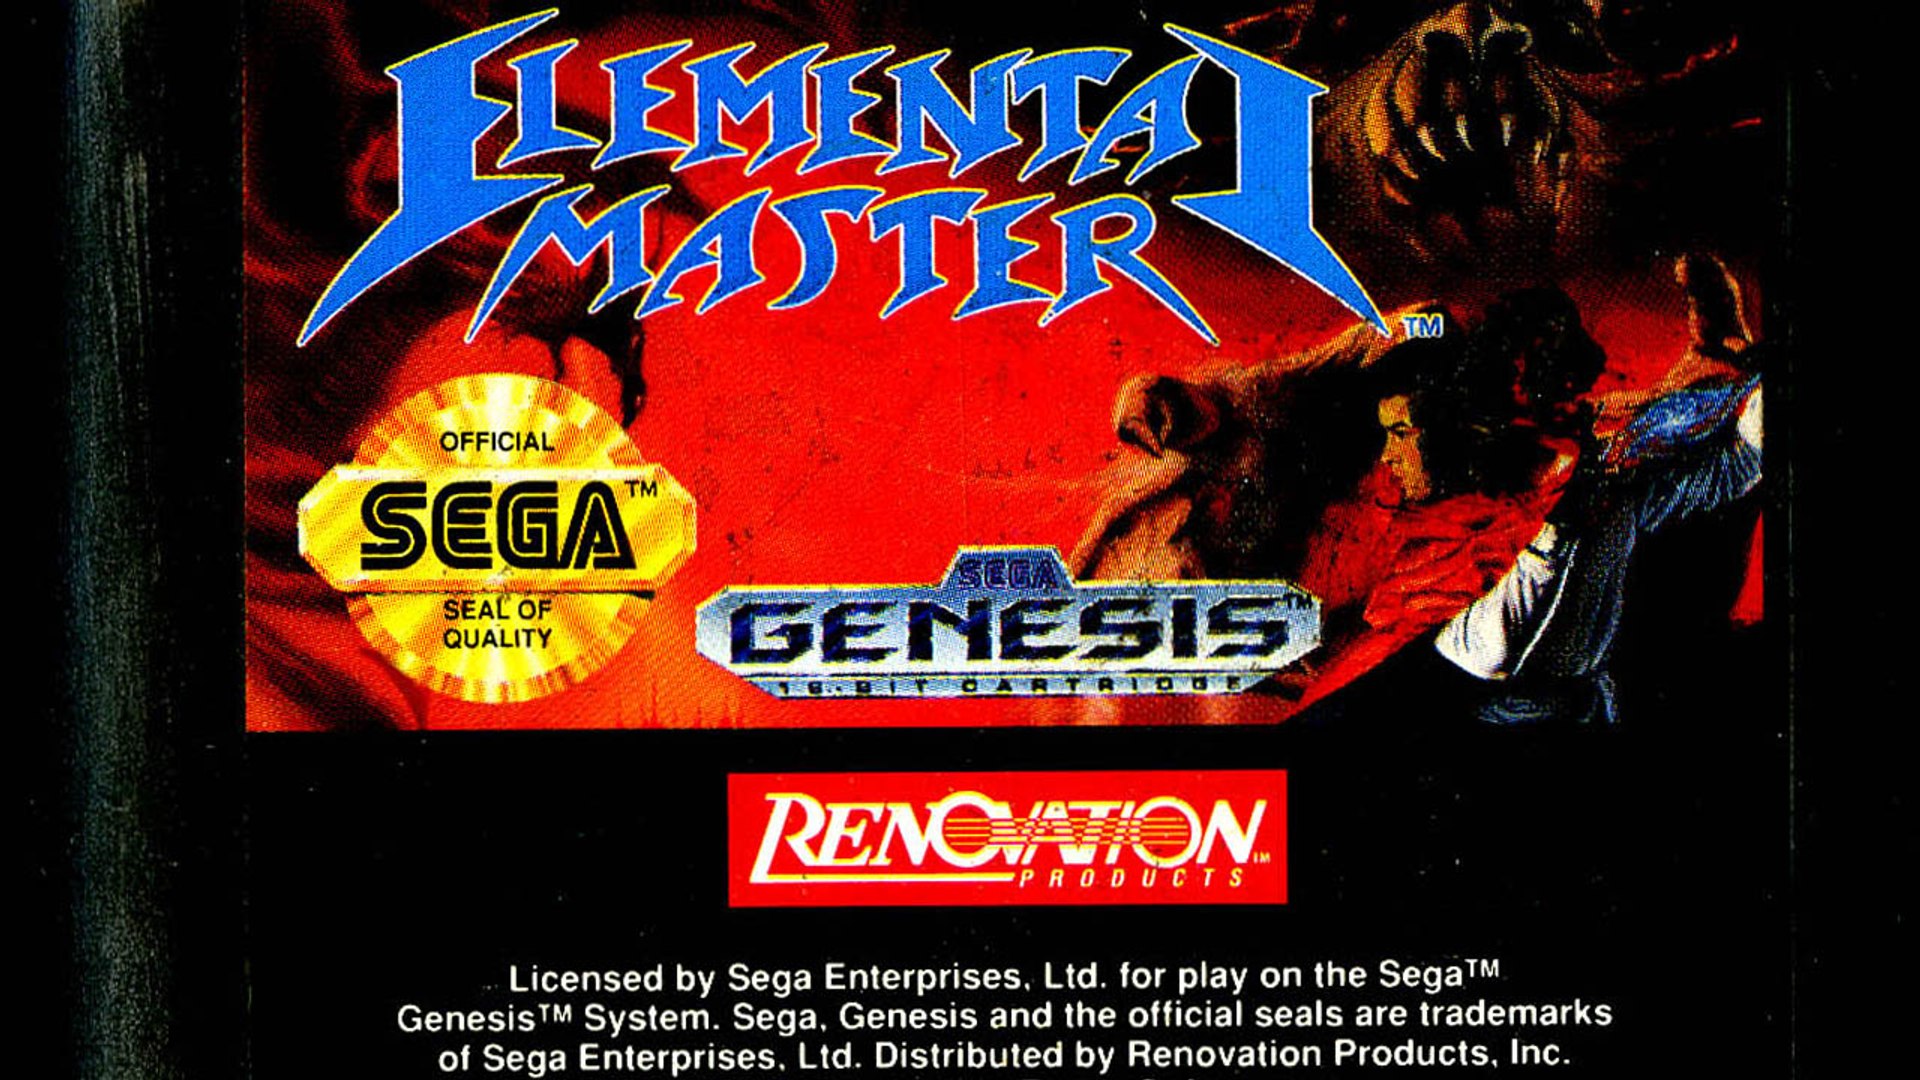 Elemental master. Elemental Master Sega. Elemental Master игра сега. Longplay of Elemental Master Sega обложка. Картридж Elemental Master Sega Original.